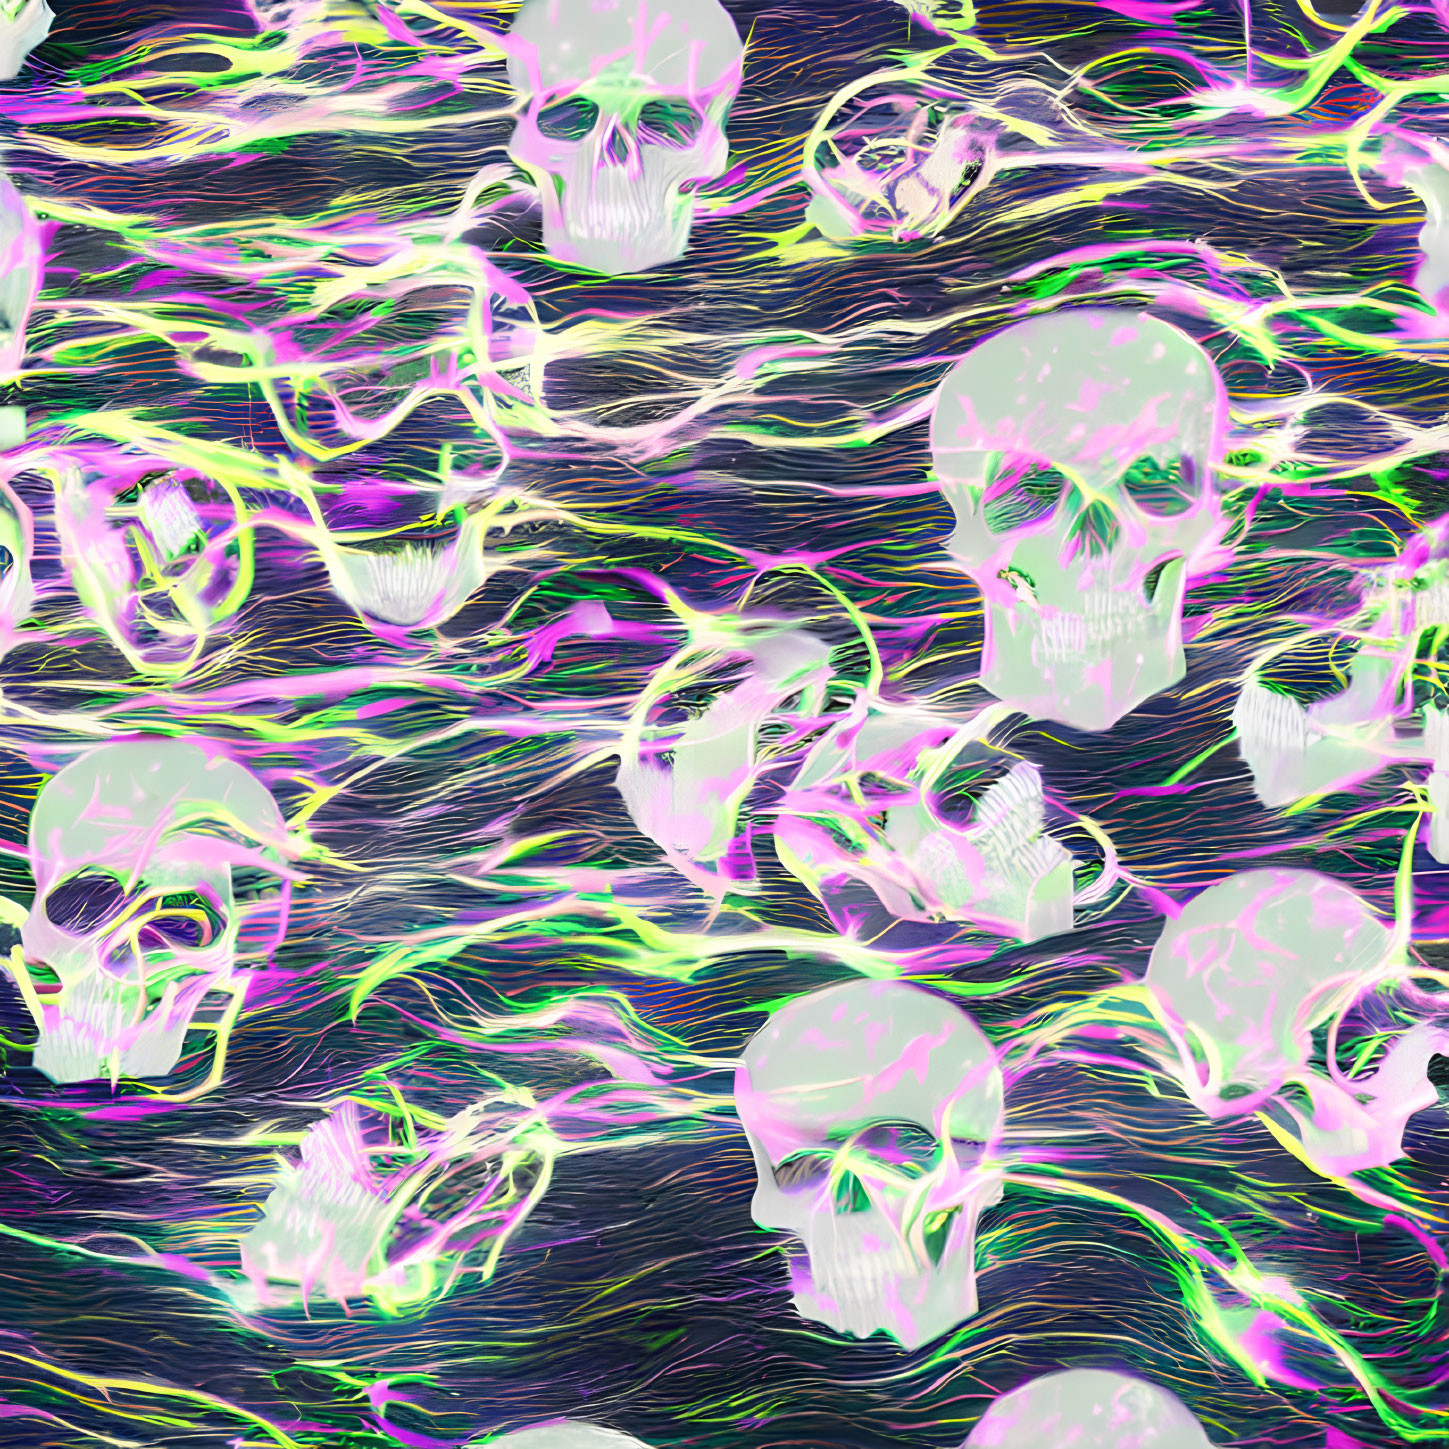 Neon skulls in vibrant swirling pattern on dark background